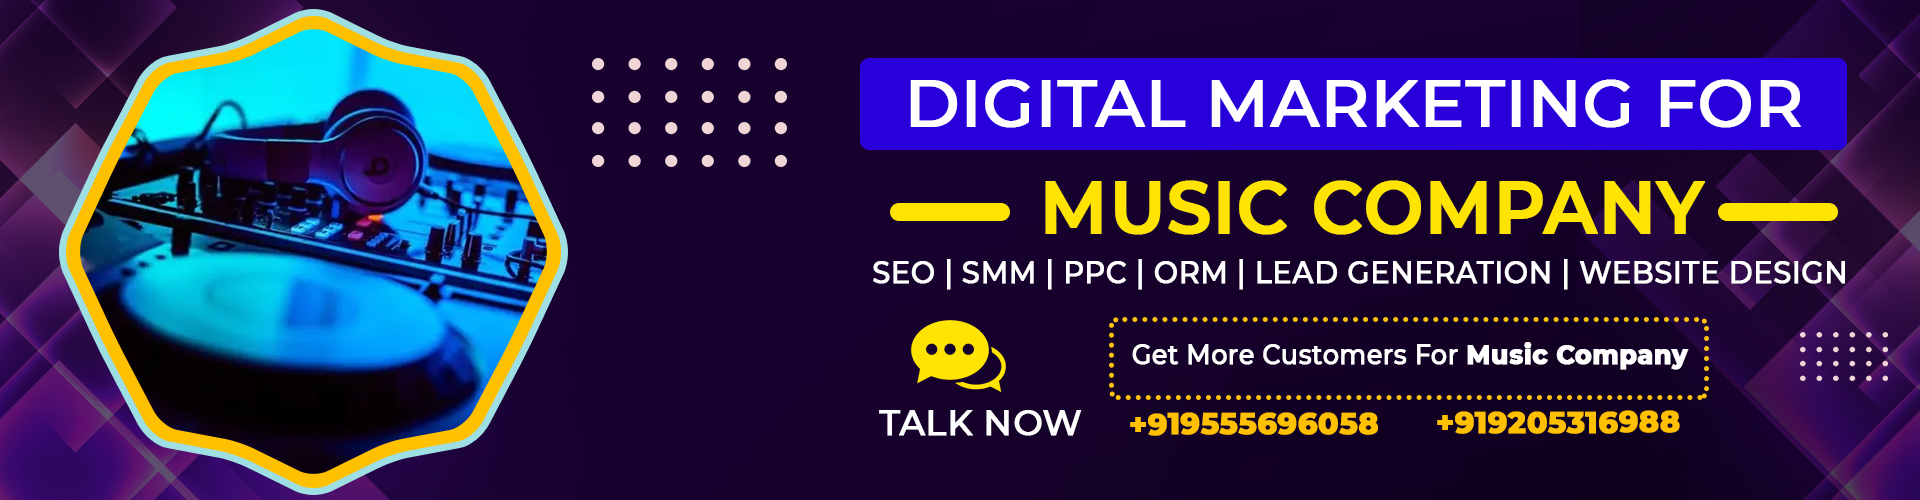 digital-marketing-for-music-company